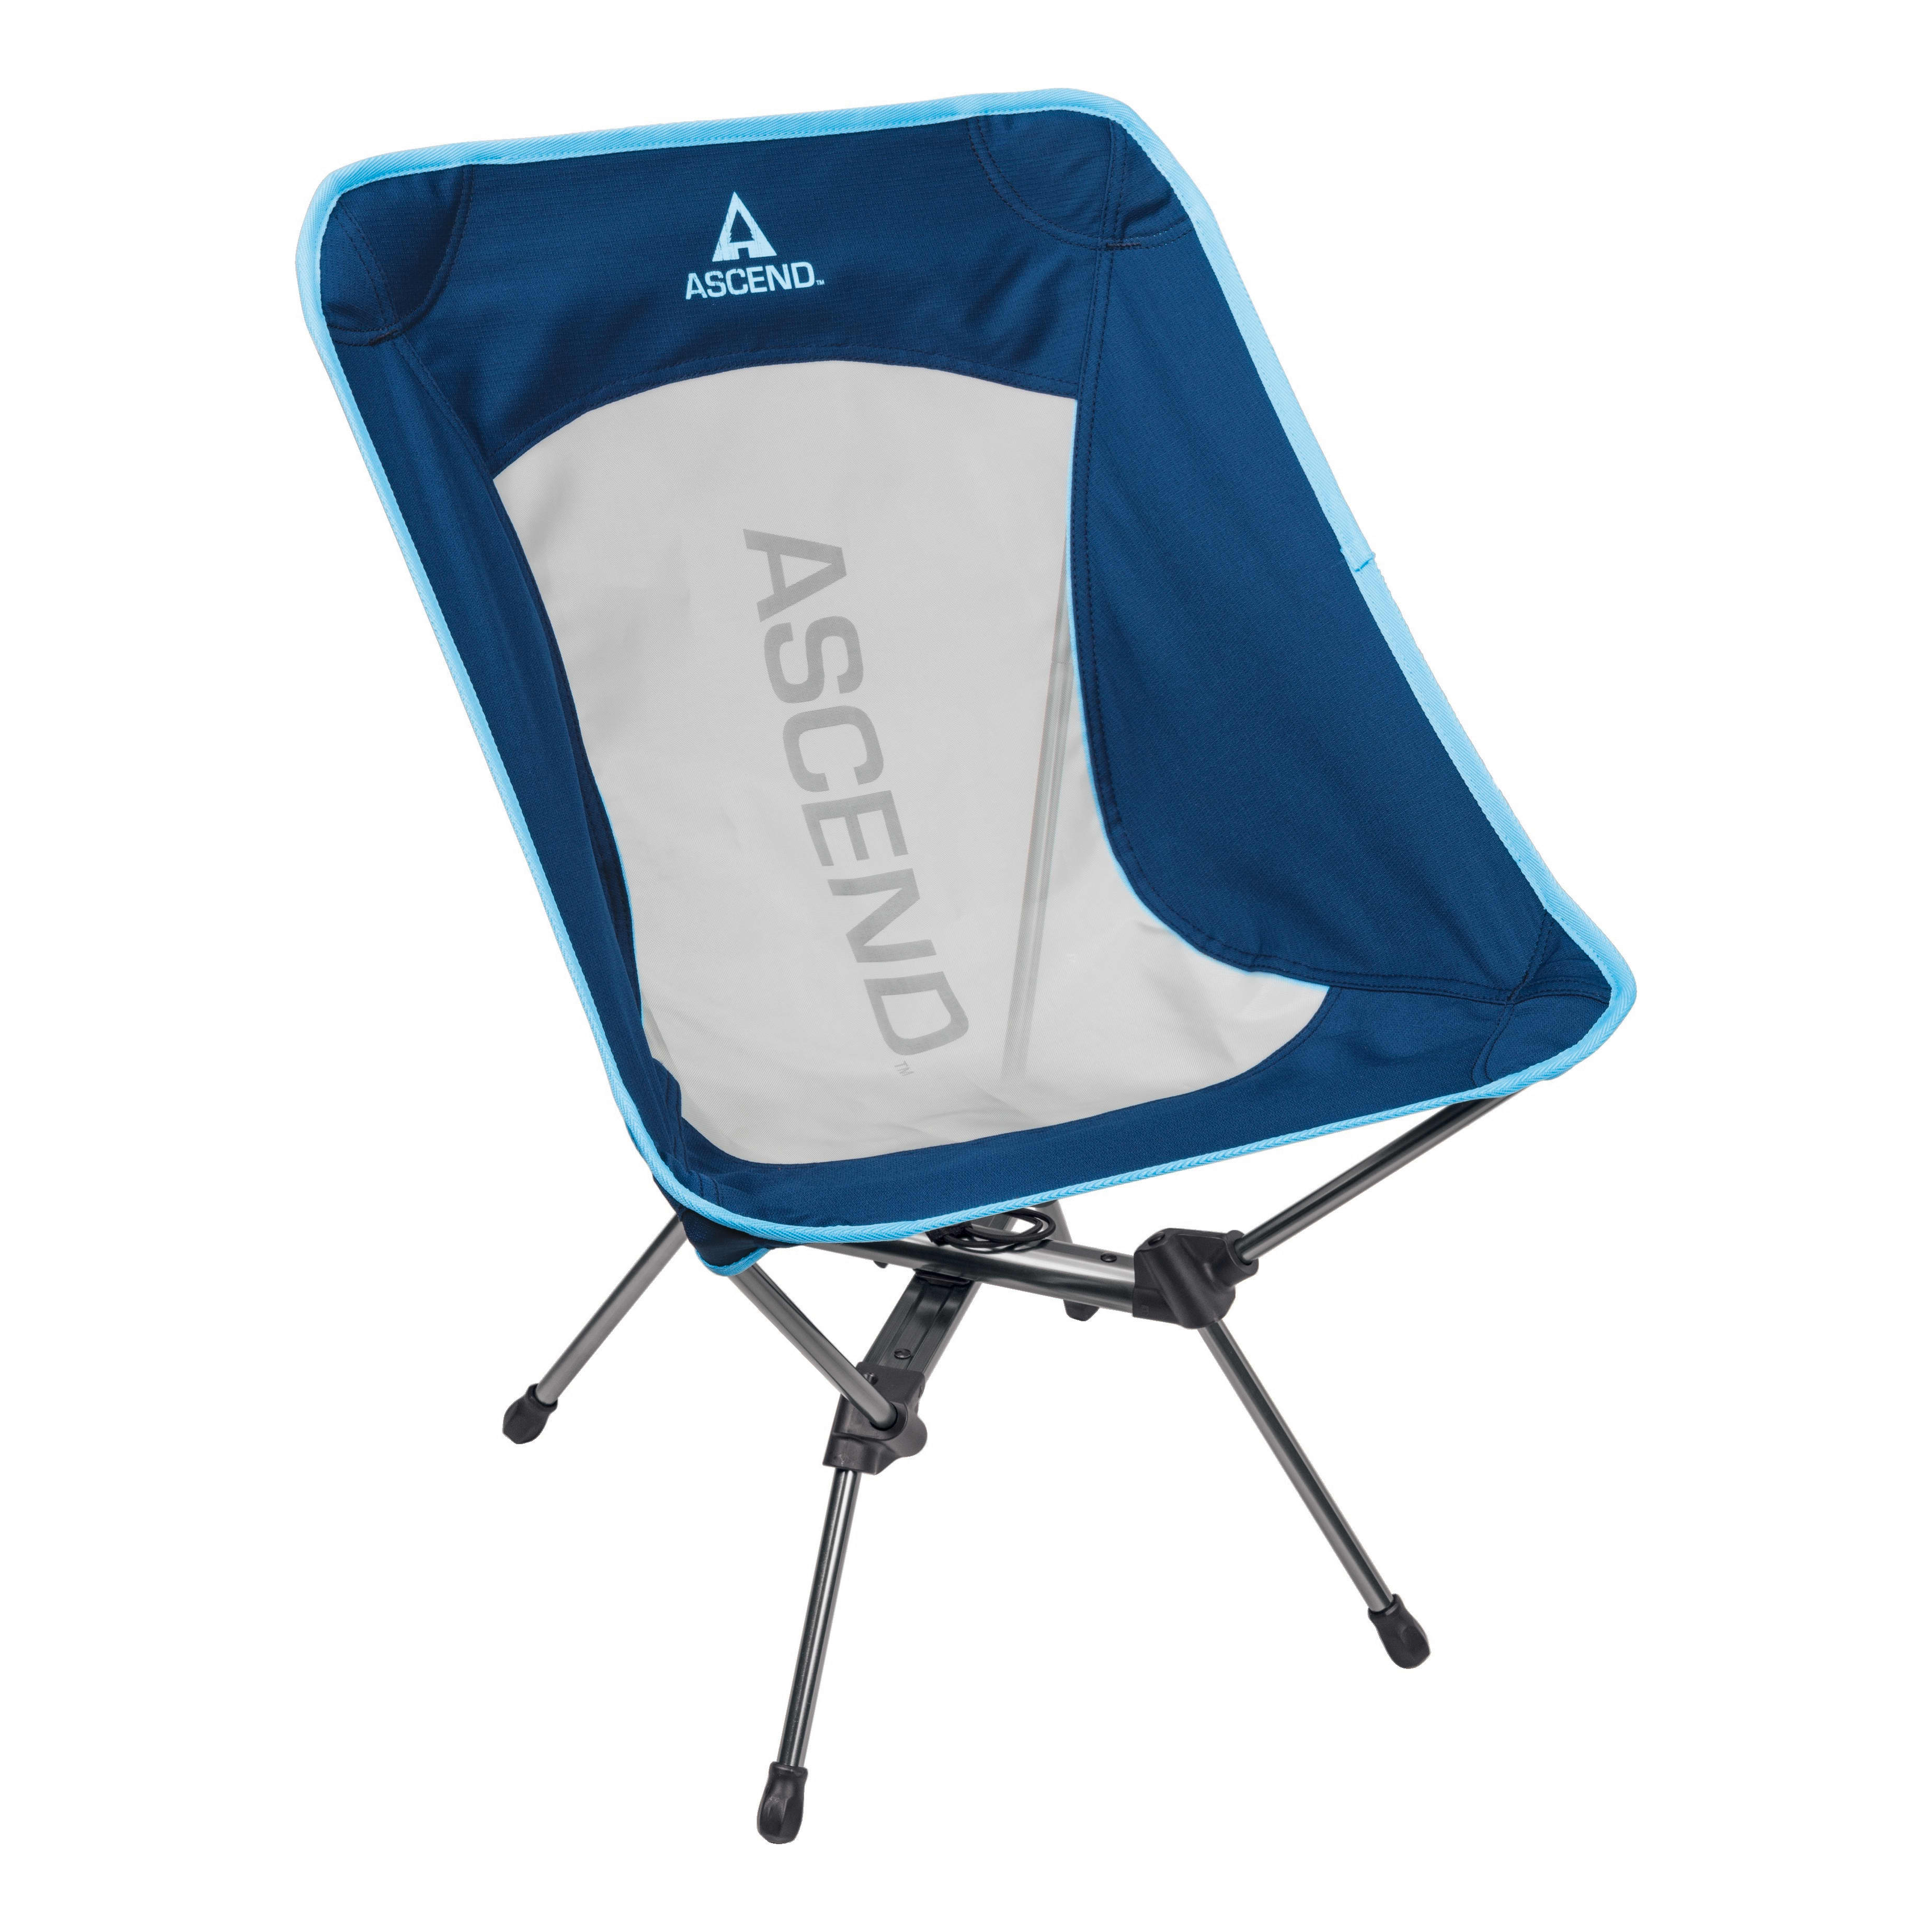 Ascend Lightweight Aluminum Camp Chair - Cabelas - ASCEND - Camp